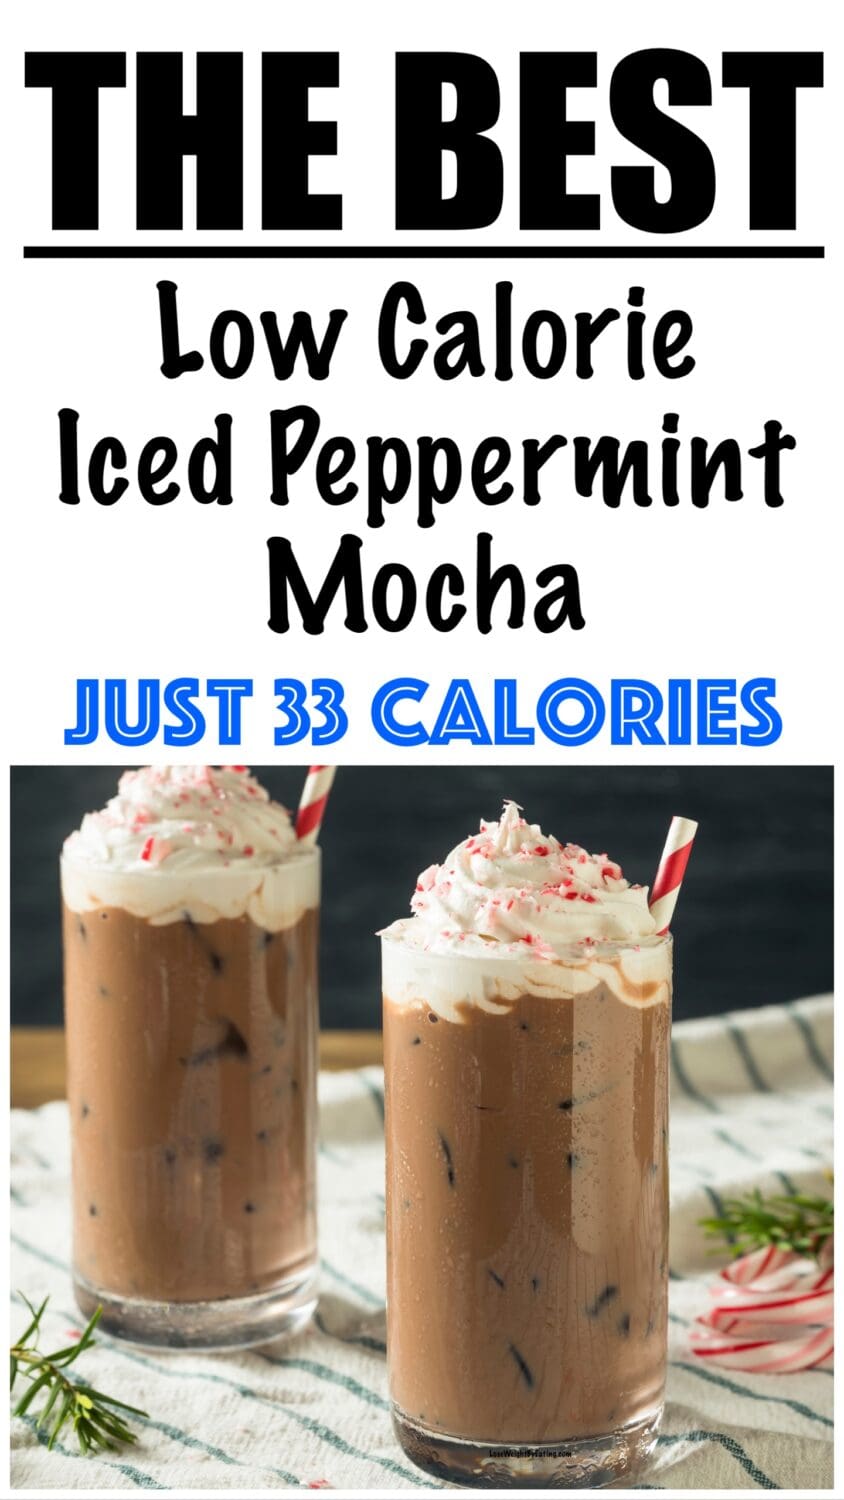 Low Calorie Iced Peppermint Mocha